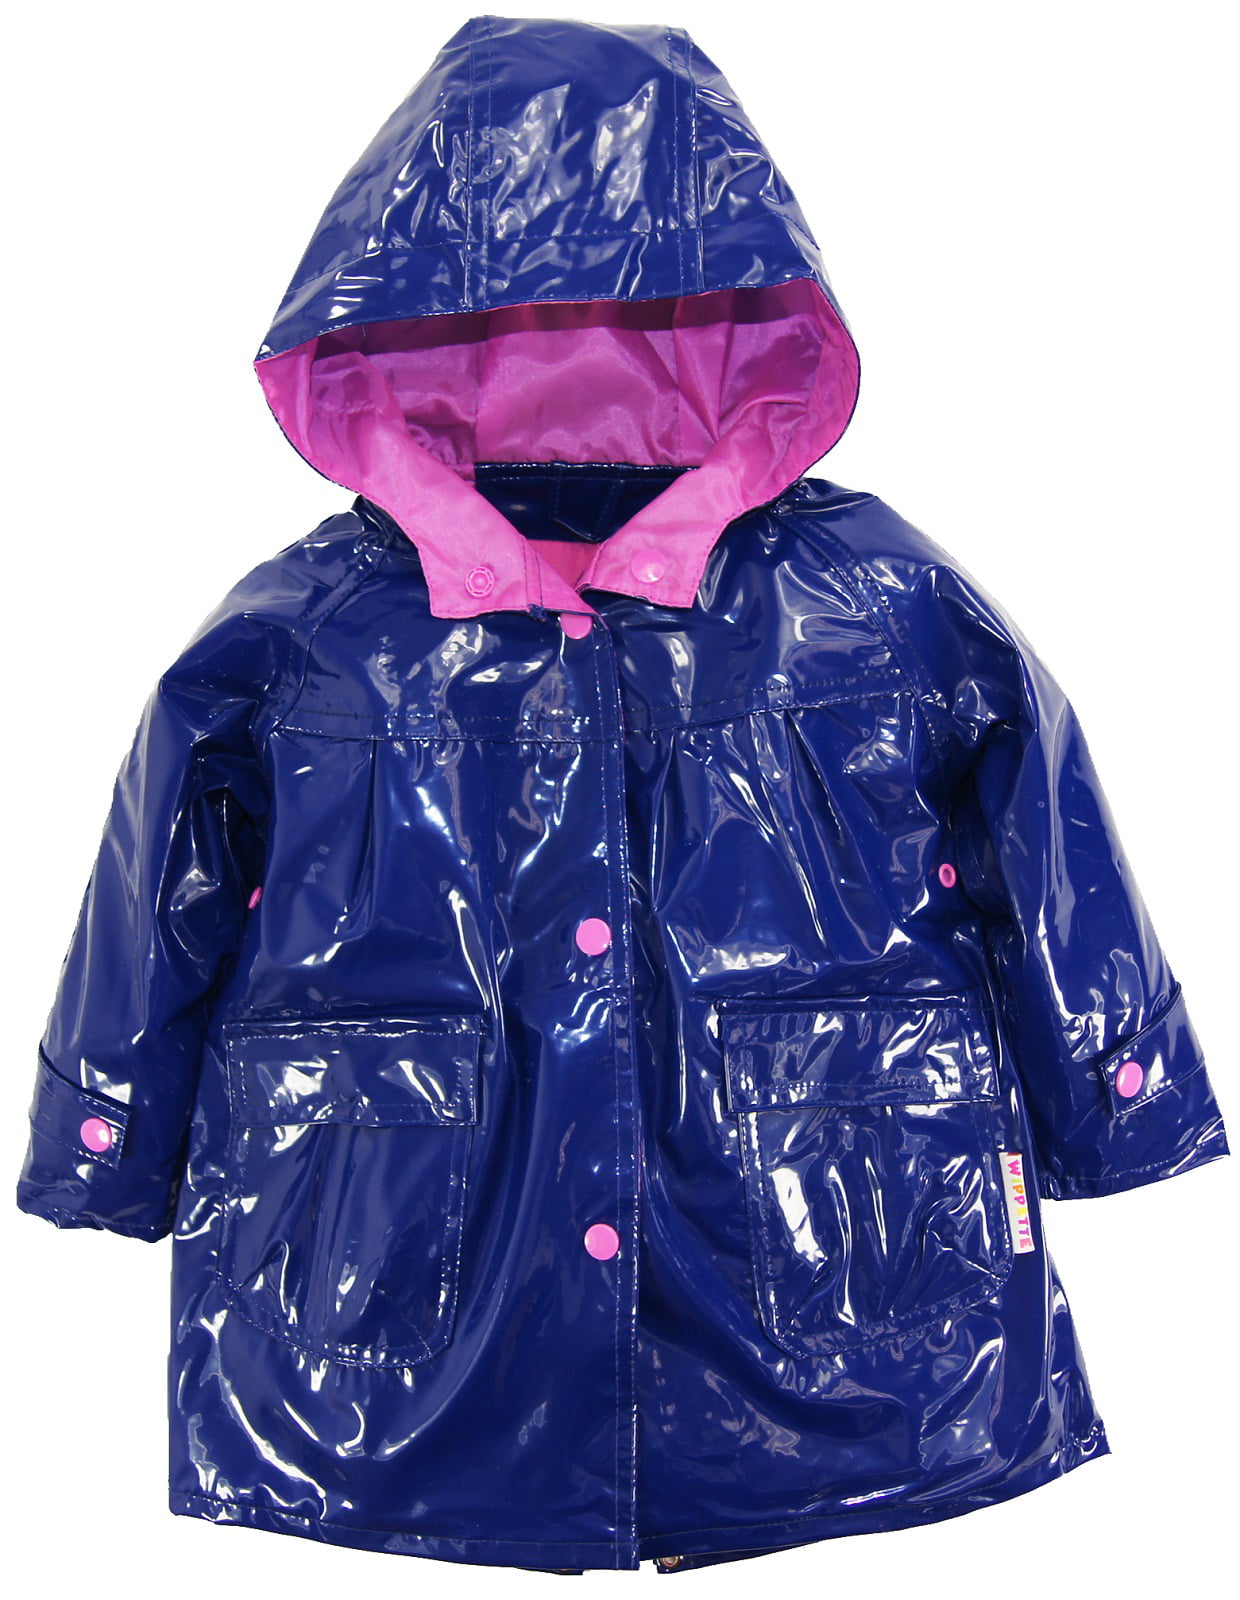 Wippette Little Girls Solid Color Raincoat Jacket 